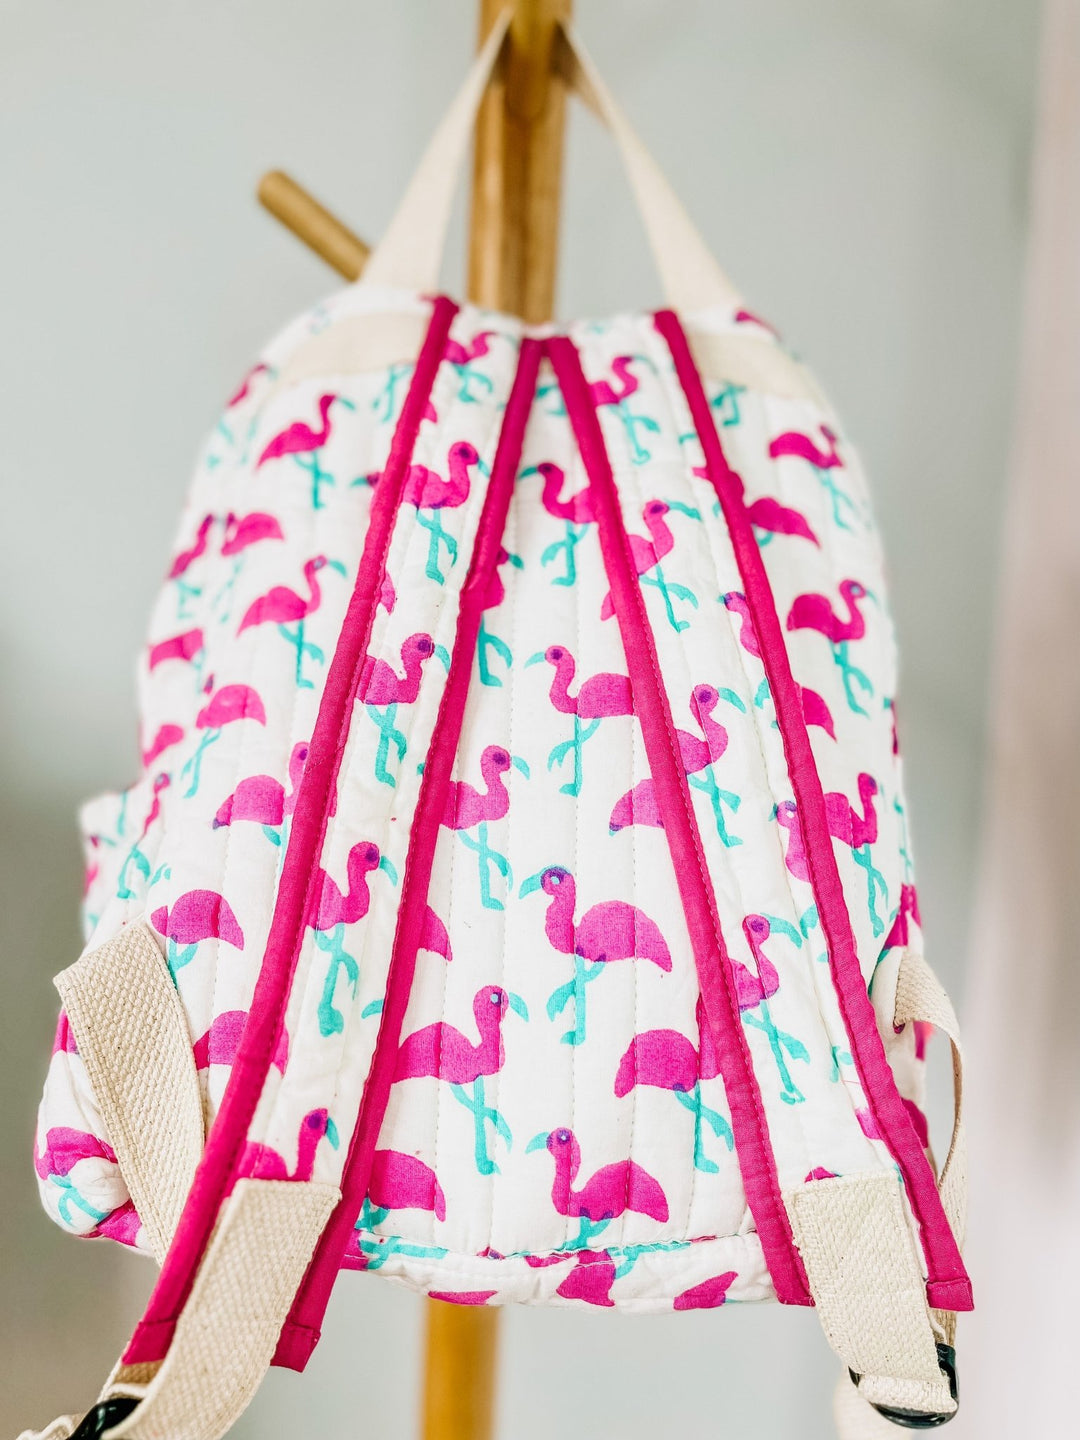 Handmade Children's Quilted Backpack | Pink Flamingo - Bombaby